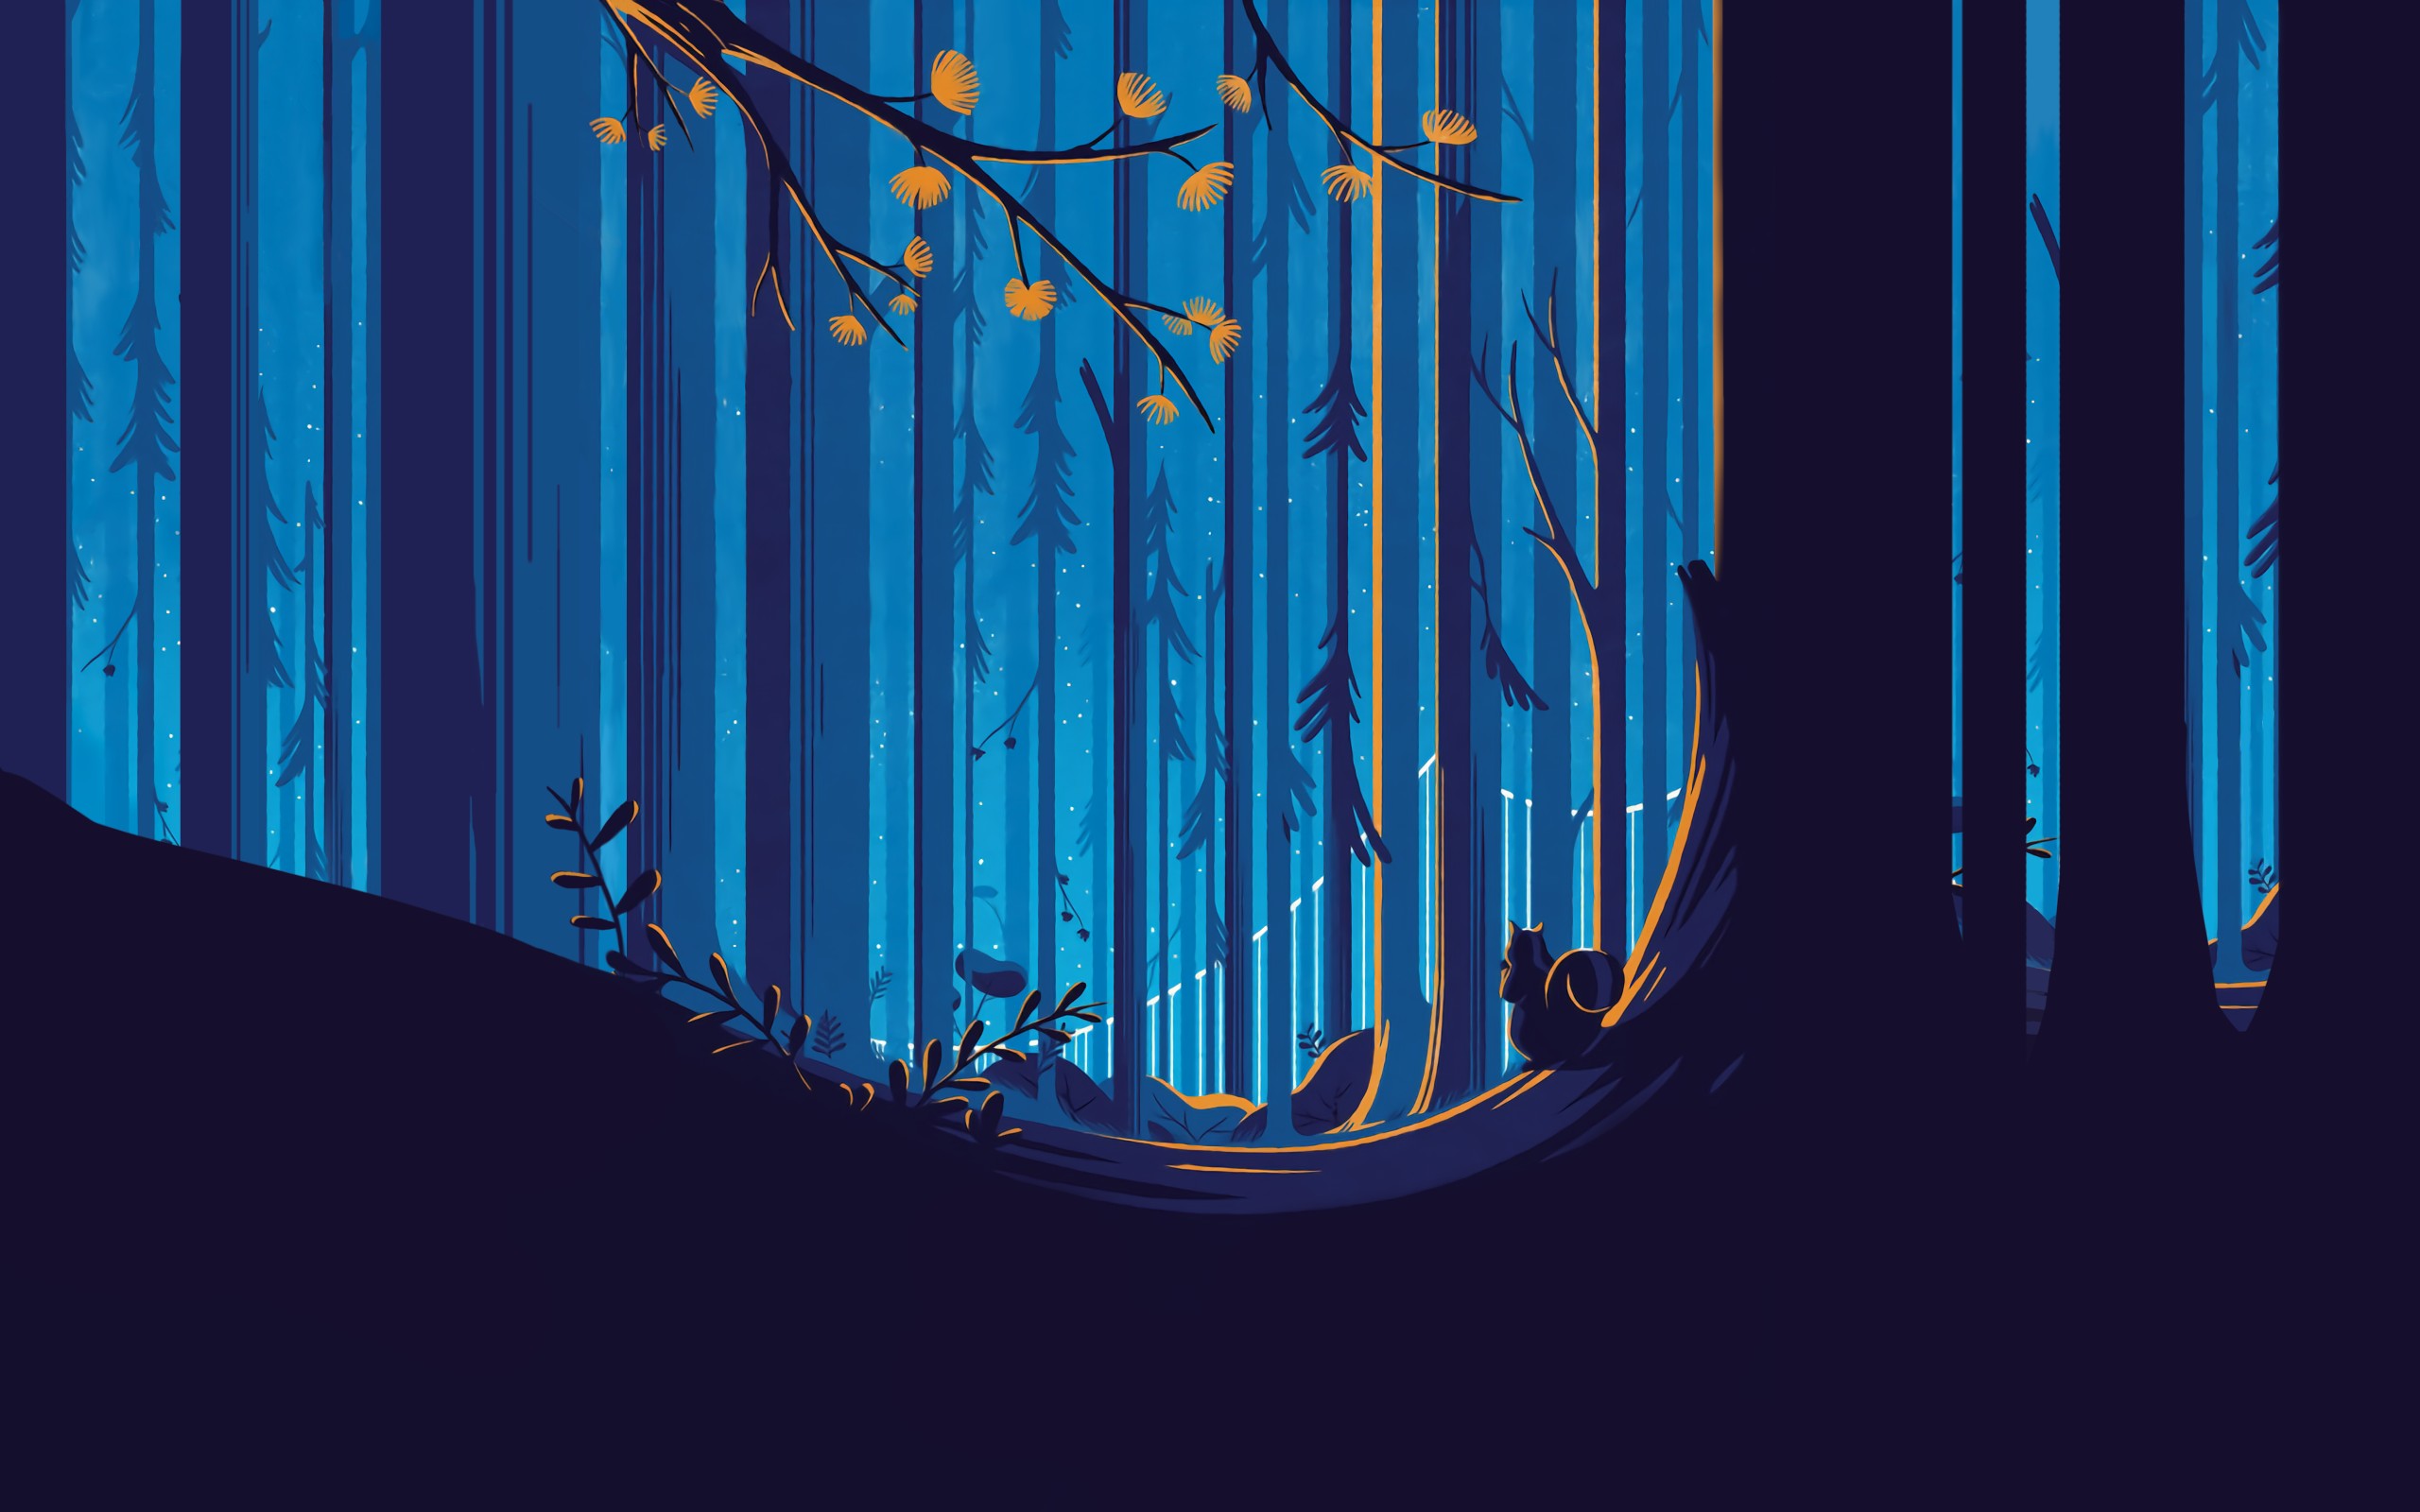 Tom Haugomat, Forest, Squirrel, Illustration, Sky blue, Yellow flower, Trees Wallpaper